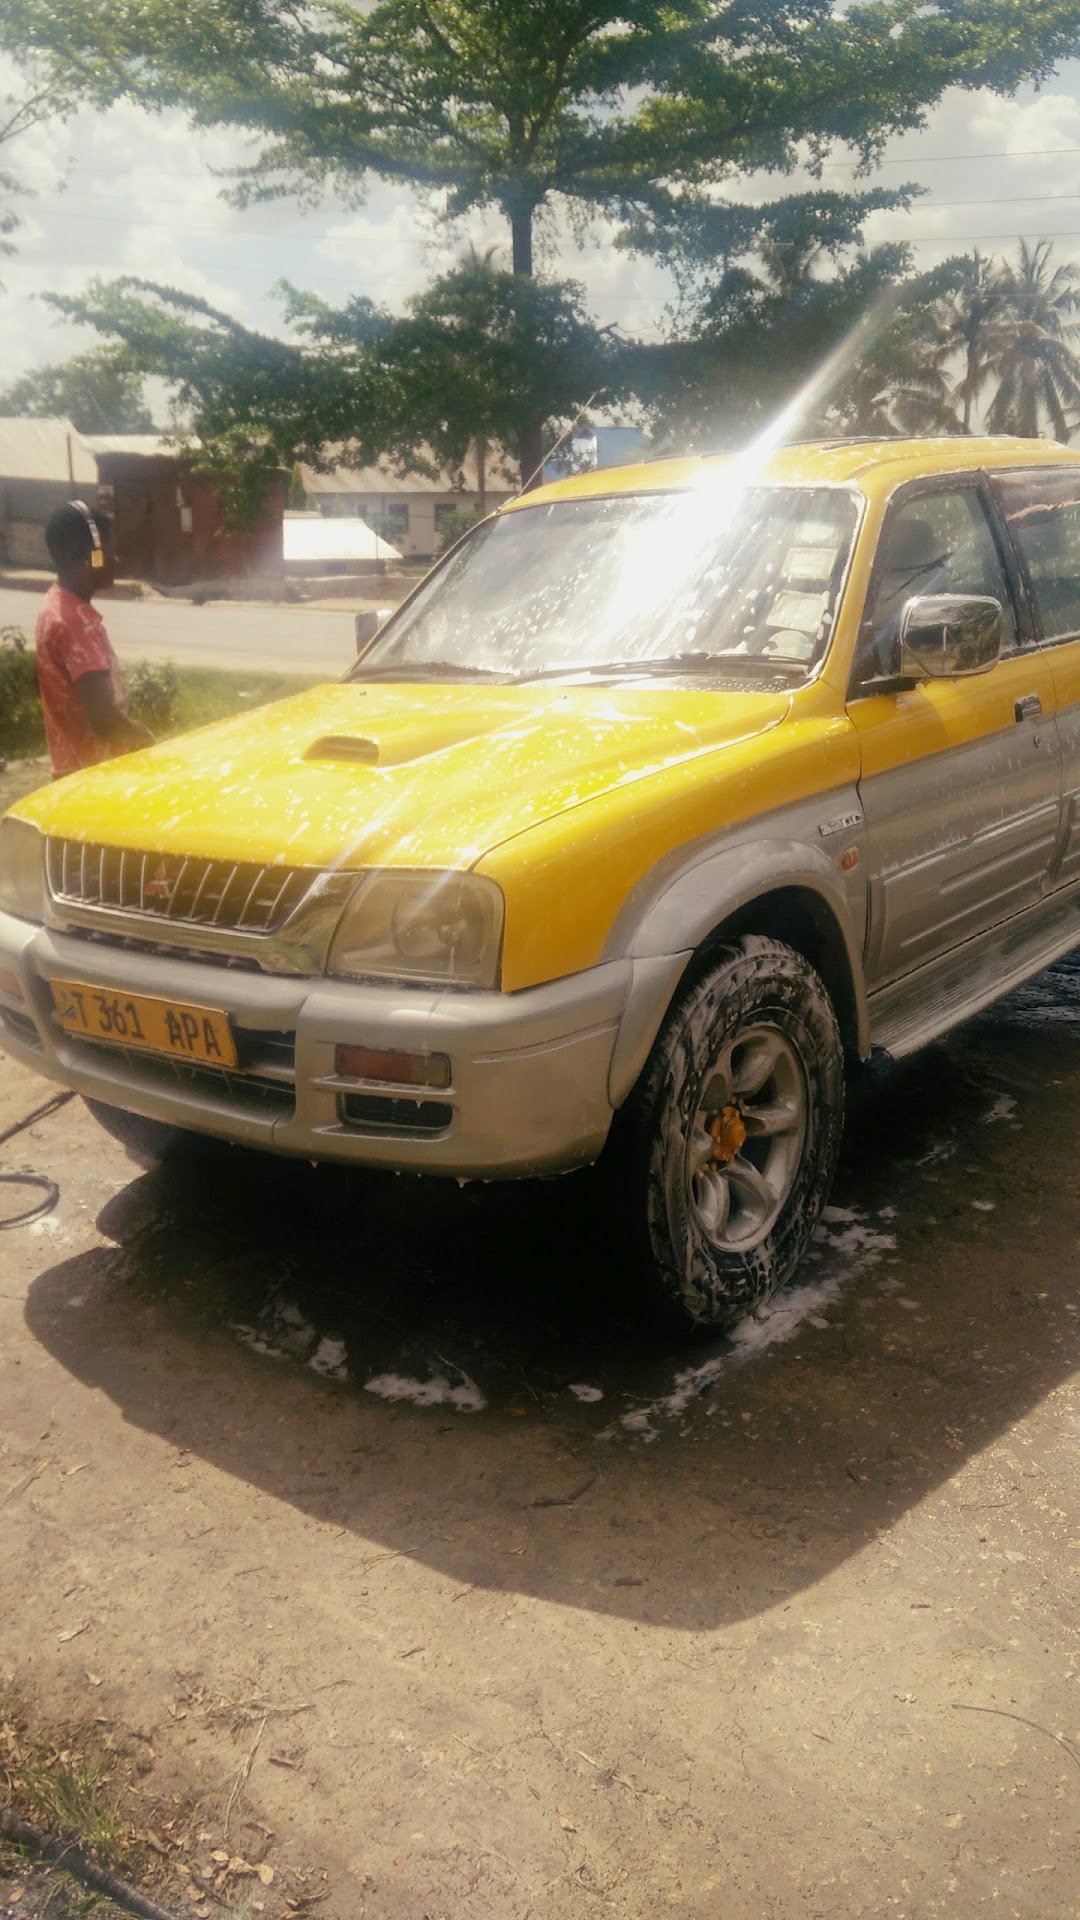 Andys car wash